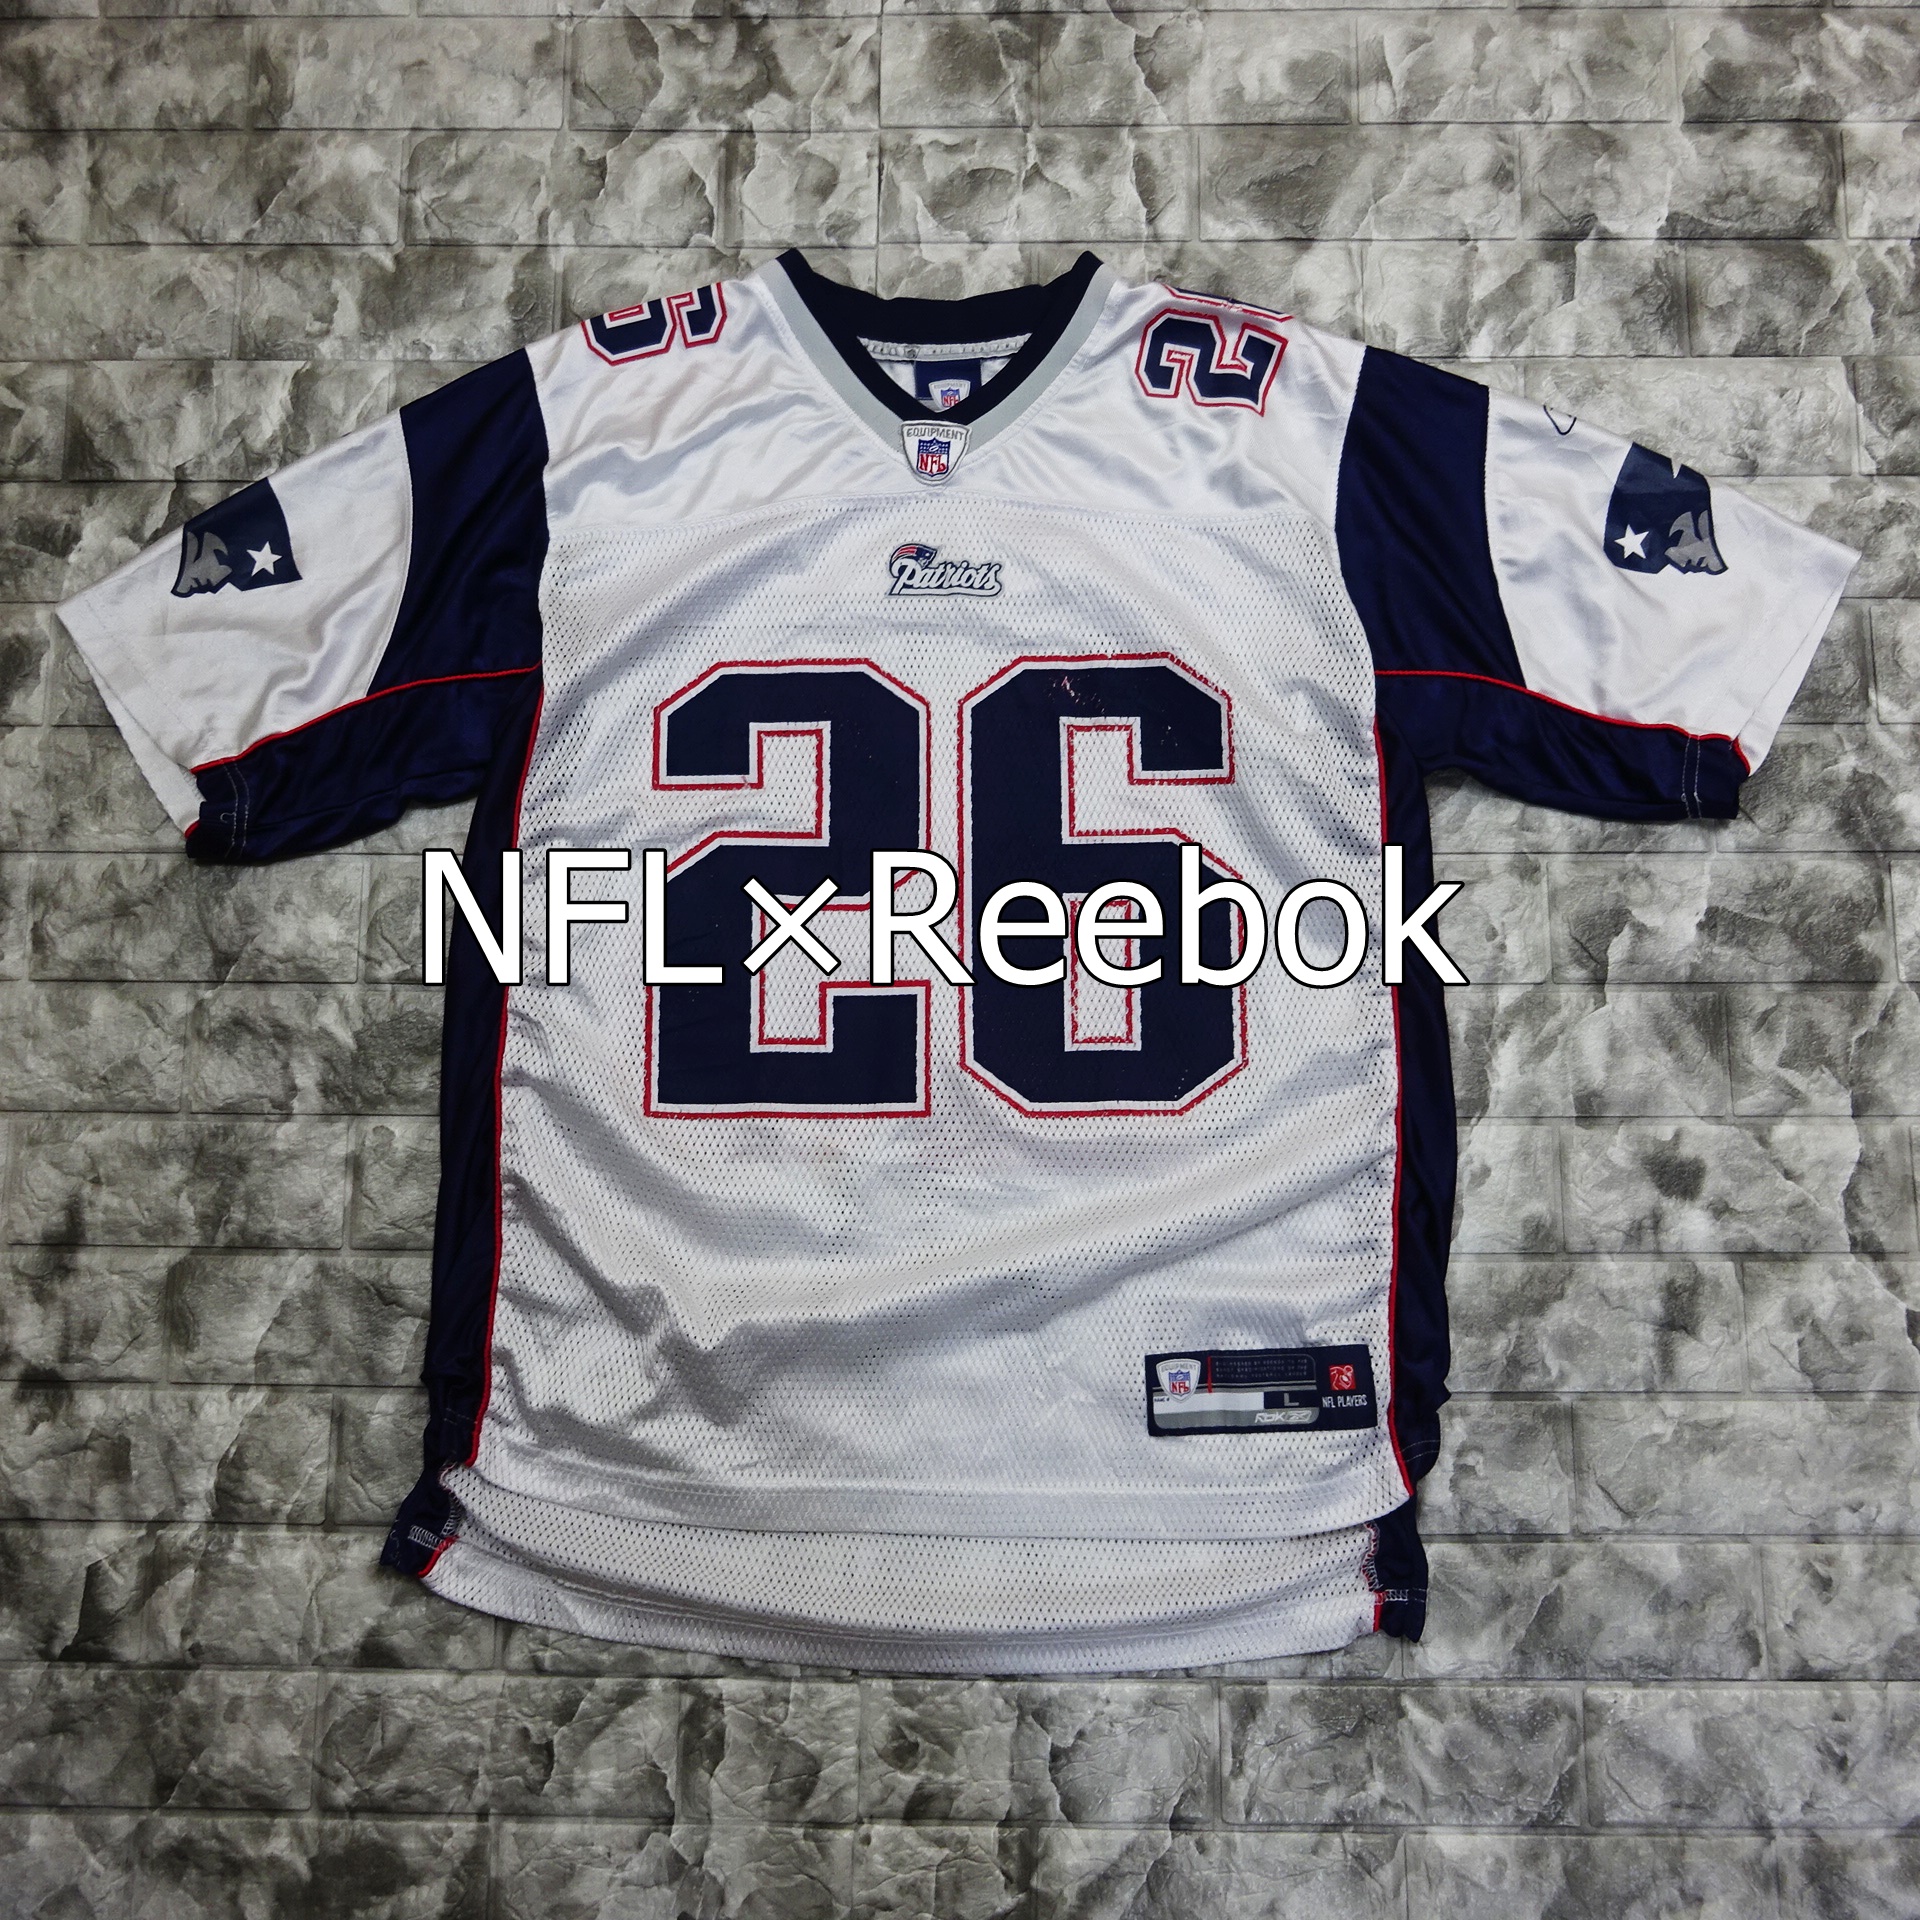 NFL×Reebok ゲームシャツ L ホワイト ネイビー メッシュ 背番号 7939